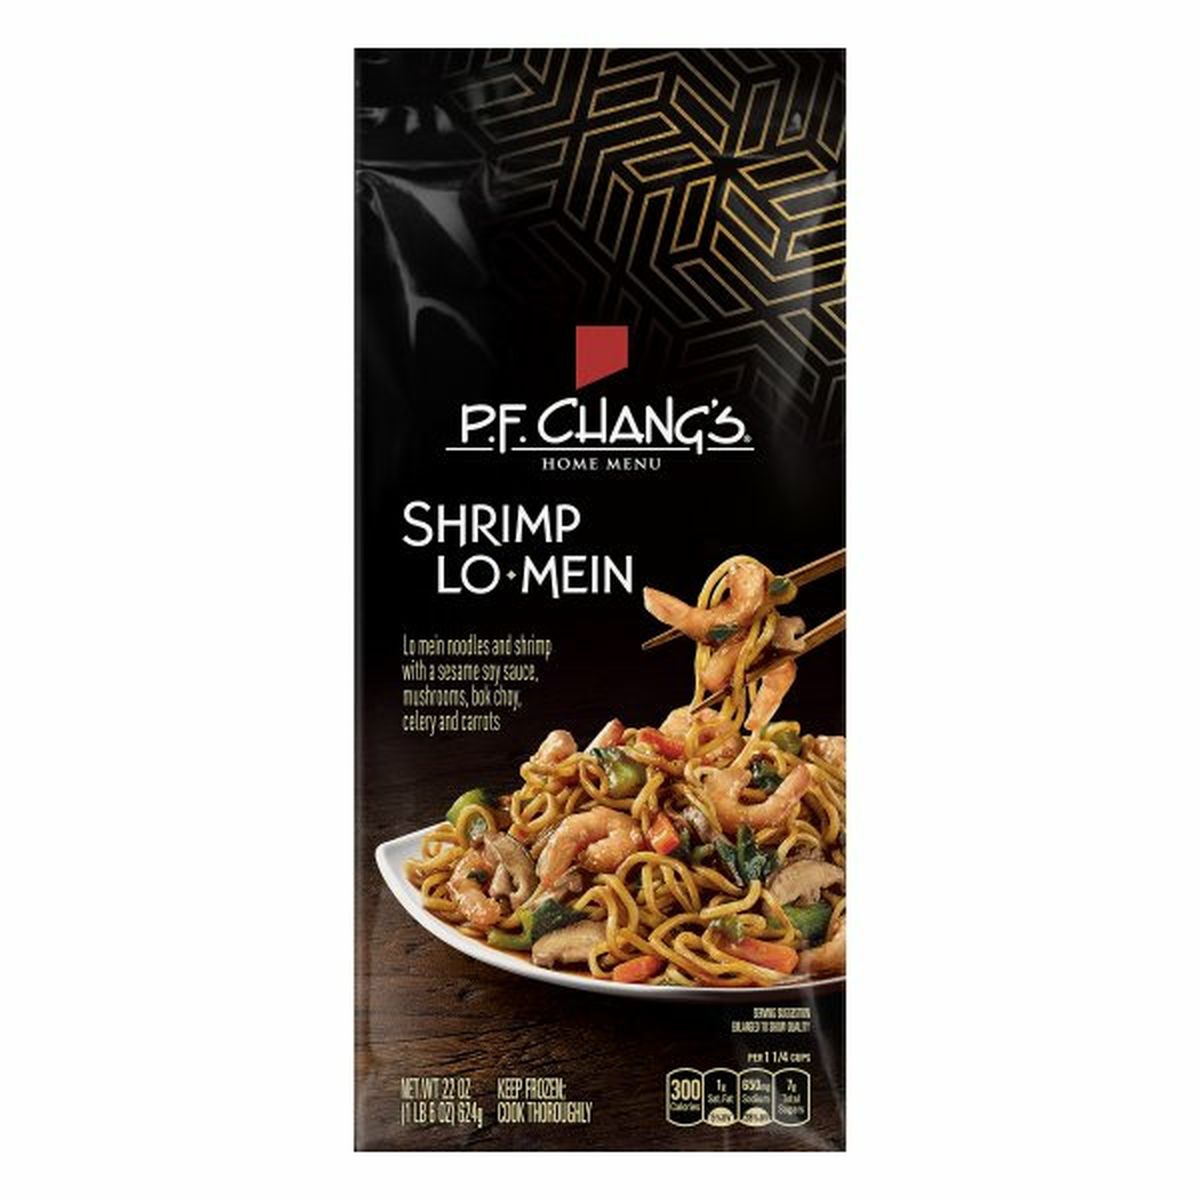 Calories in P.F. Chang's Home Menu Shrimp Lo Mein